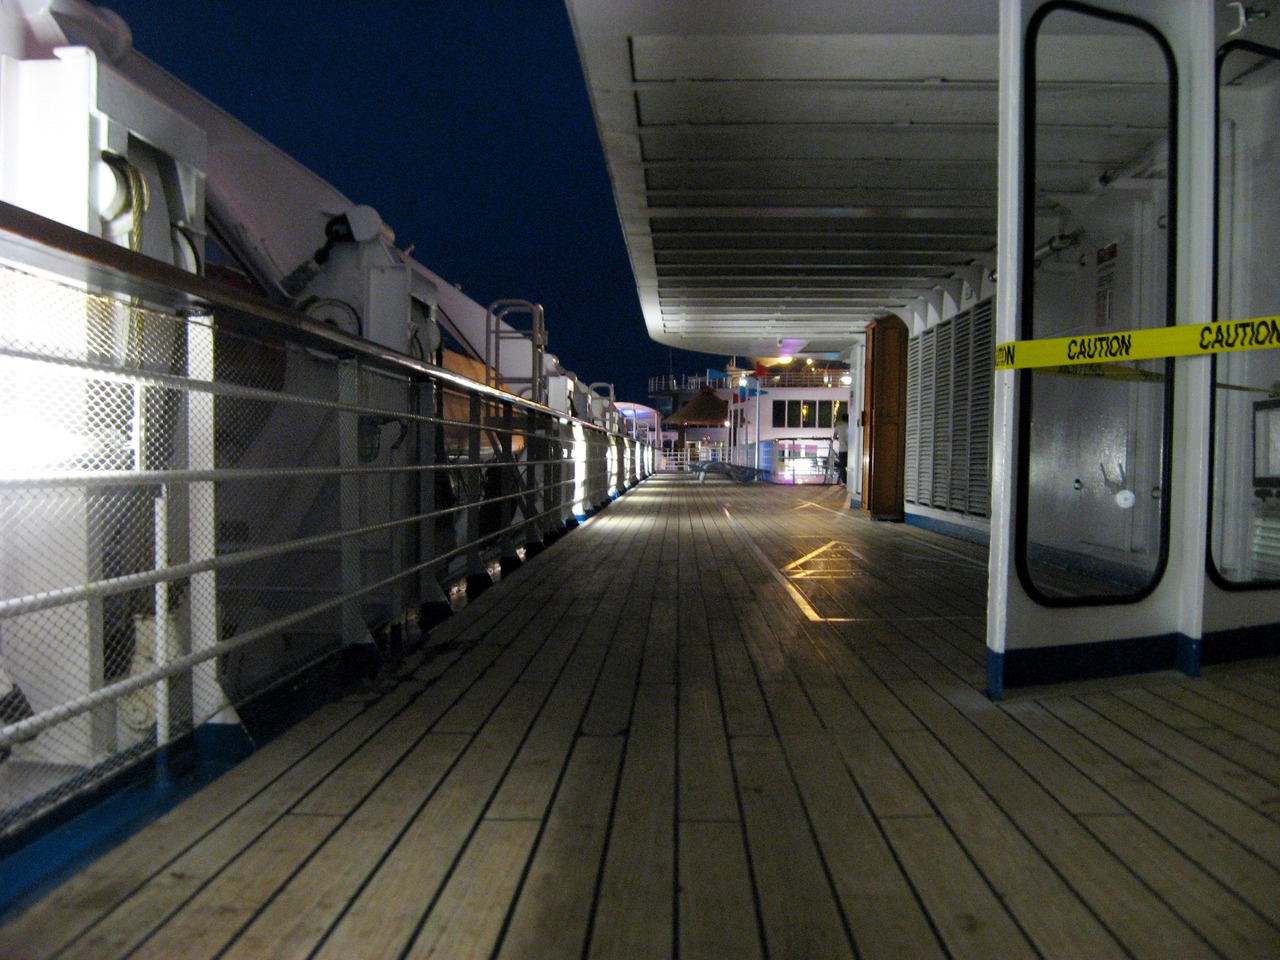 Looking forward on the Deck 11 port exterior corridor under the ship's smokestack on Carnival Sensation.